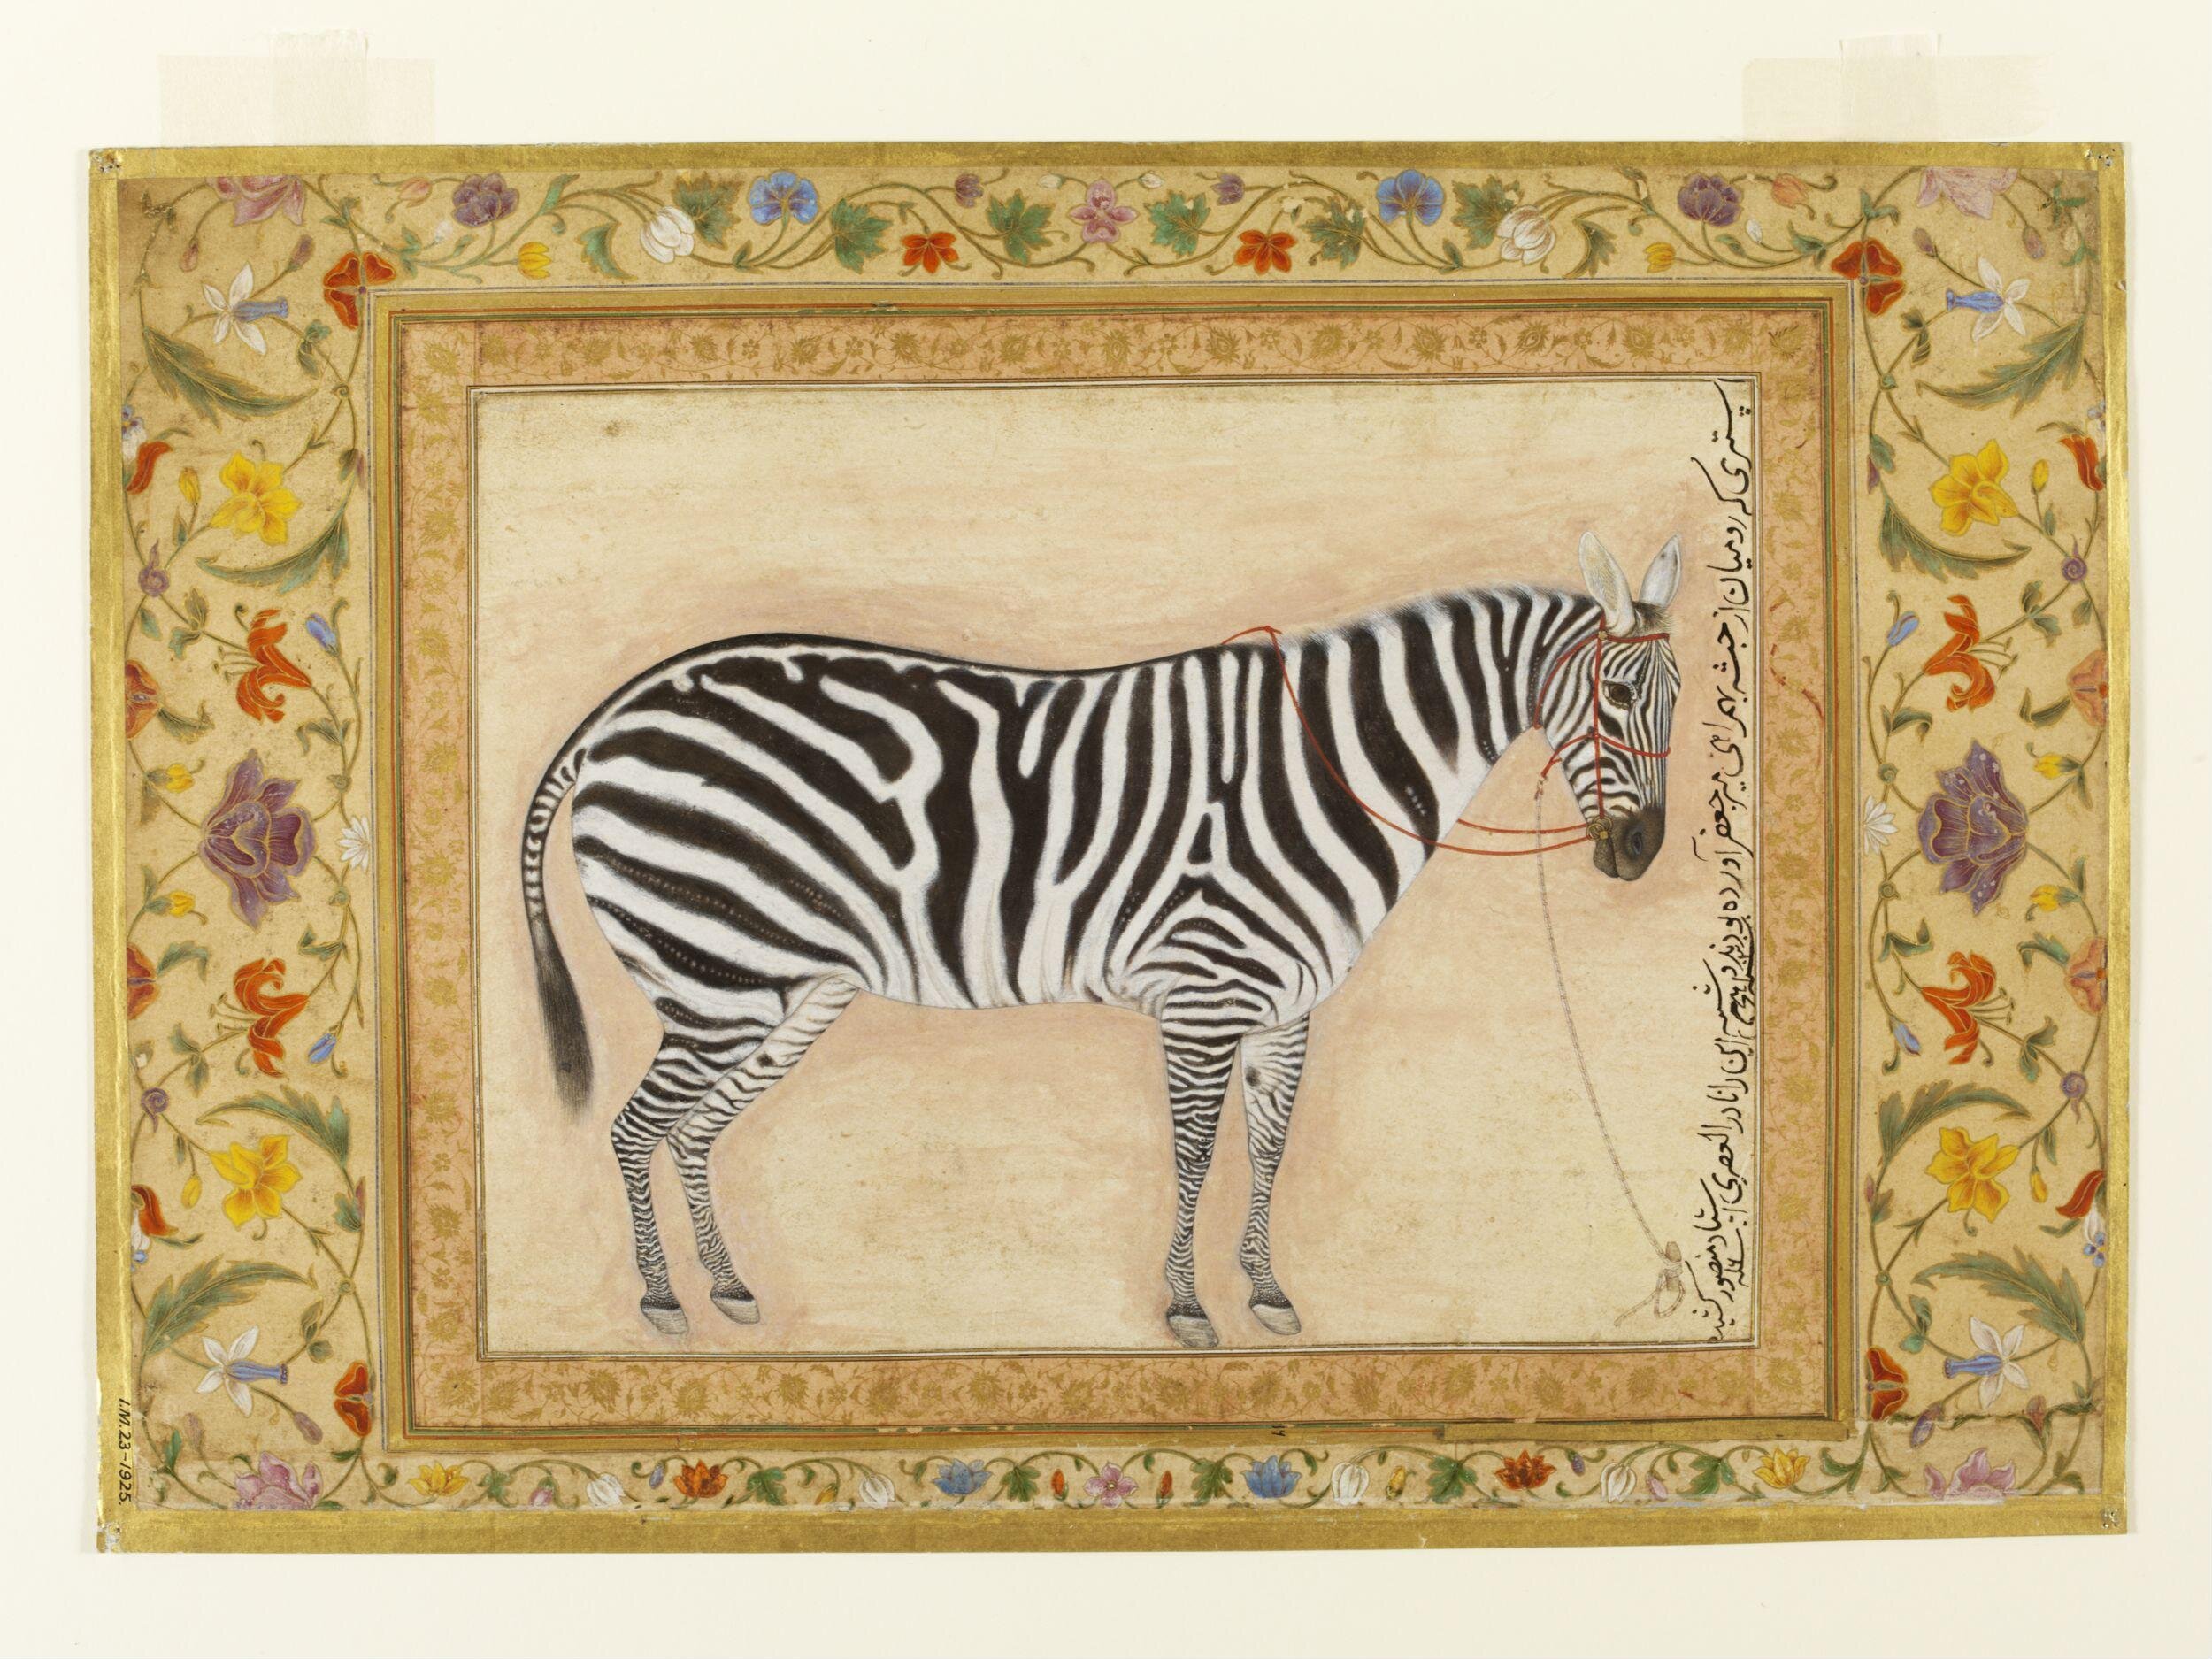 De zebra by Ustad Mansur - 1621 - 38,7 x 24 cm 